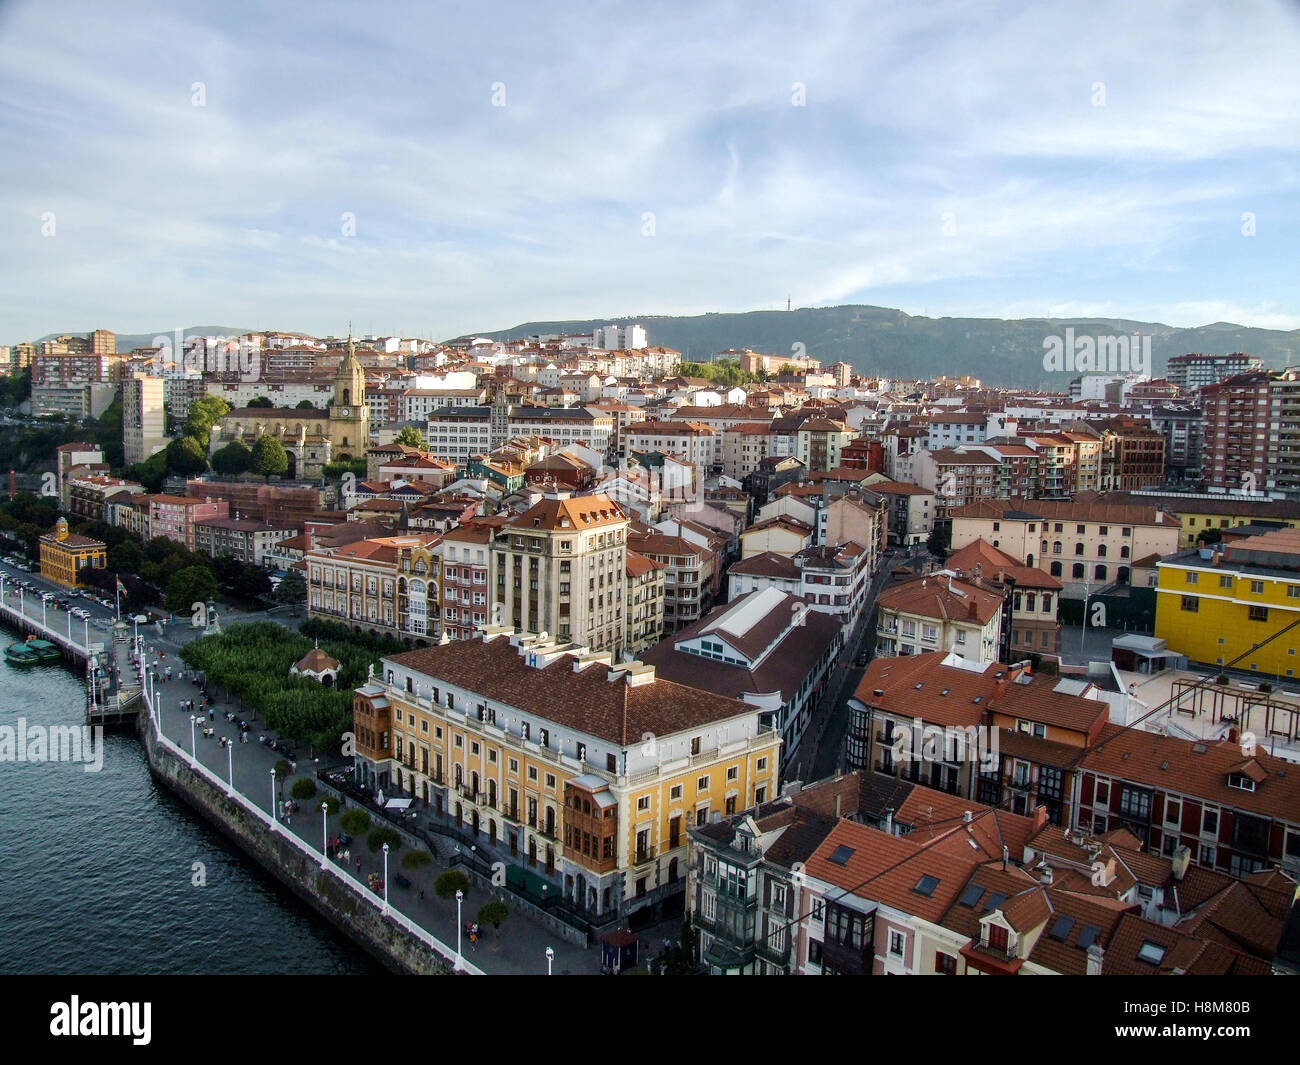 La ville de Bilbao (Bilbao) vue depuis le pont suspendu Banque D'Images